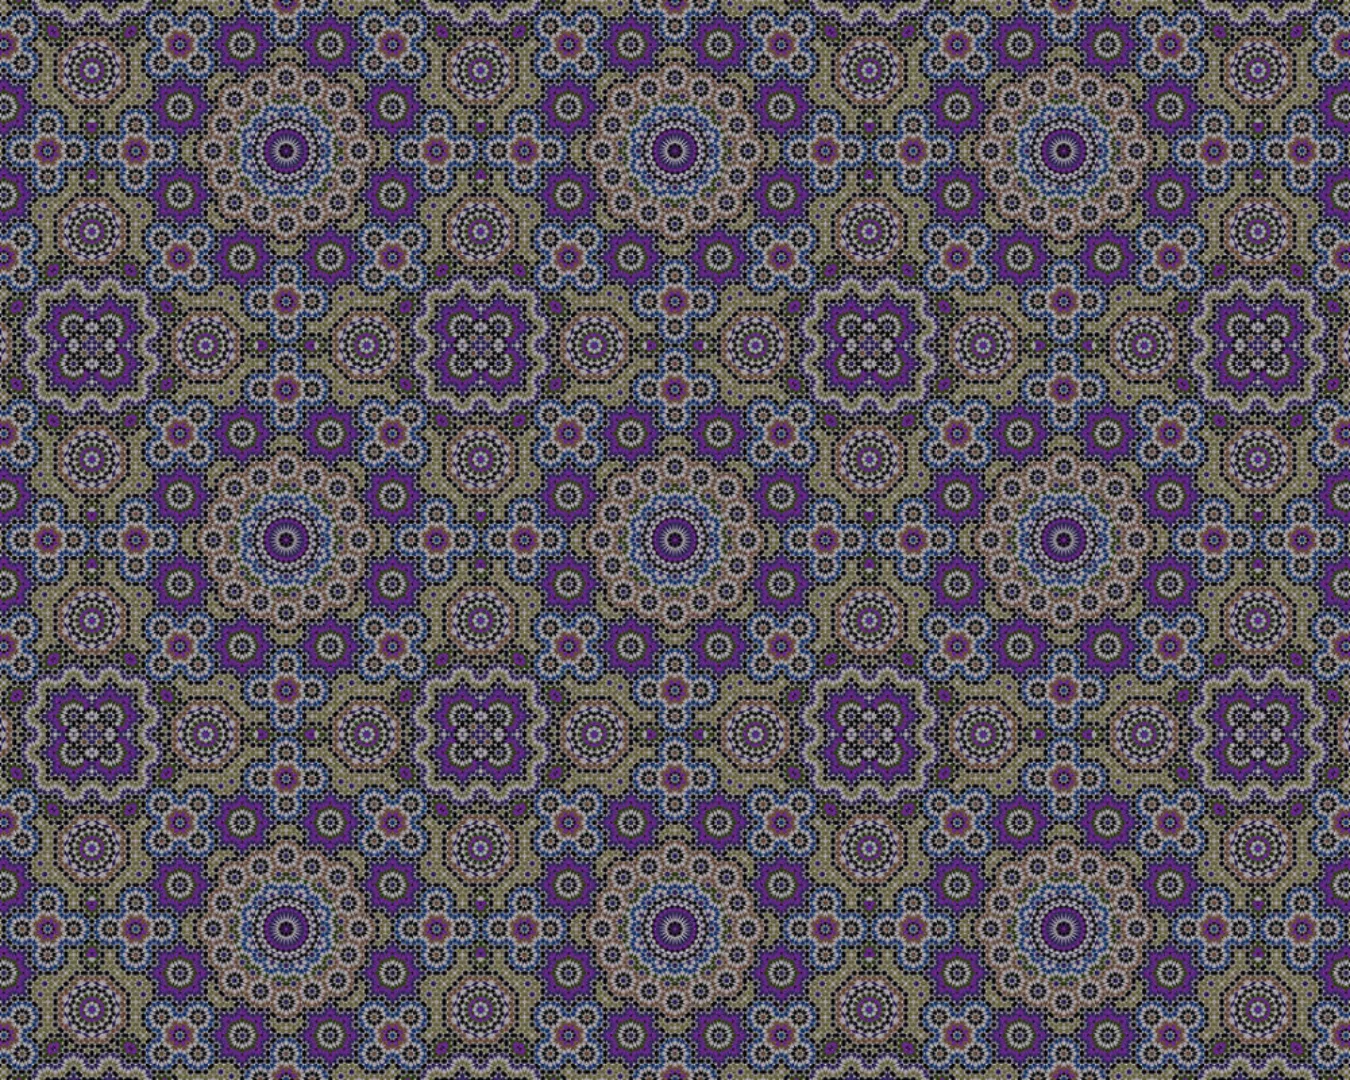 Fototapete "Mosaic III Purple" 4,00x2,50 m / Glattvlies Brillant günstig online kaufen